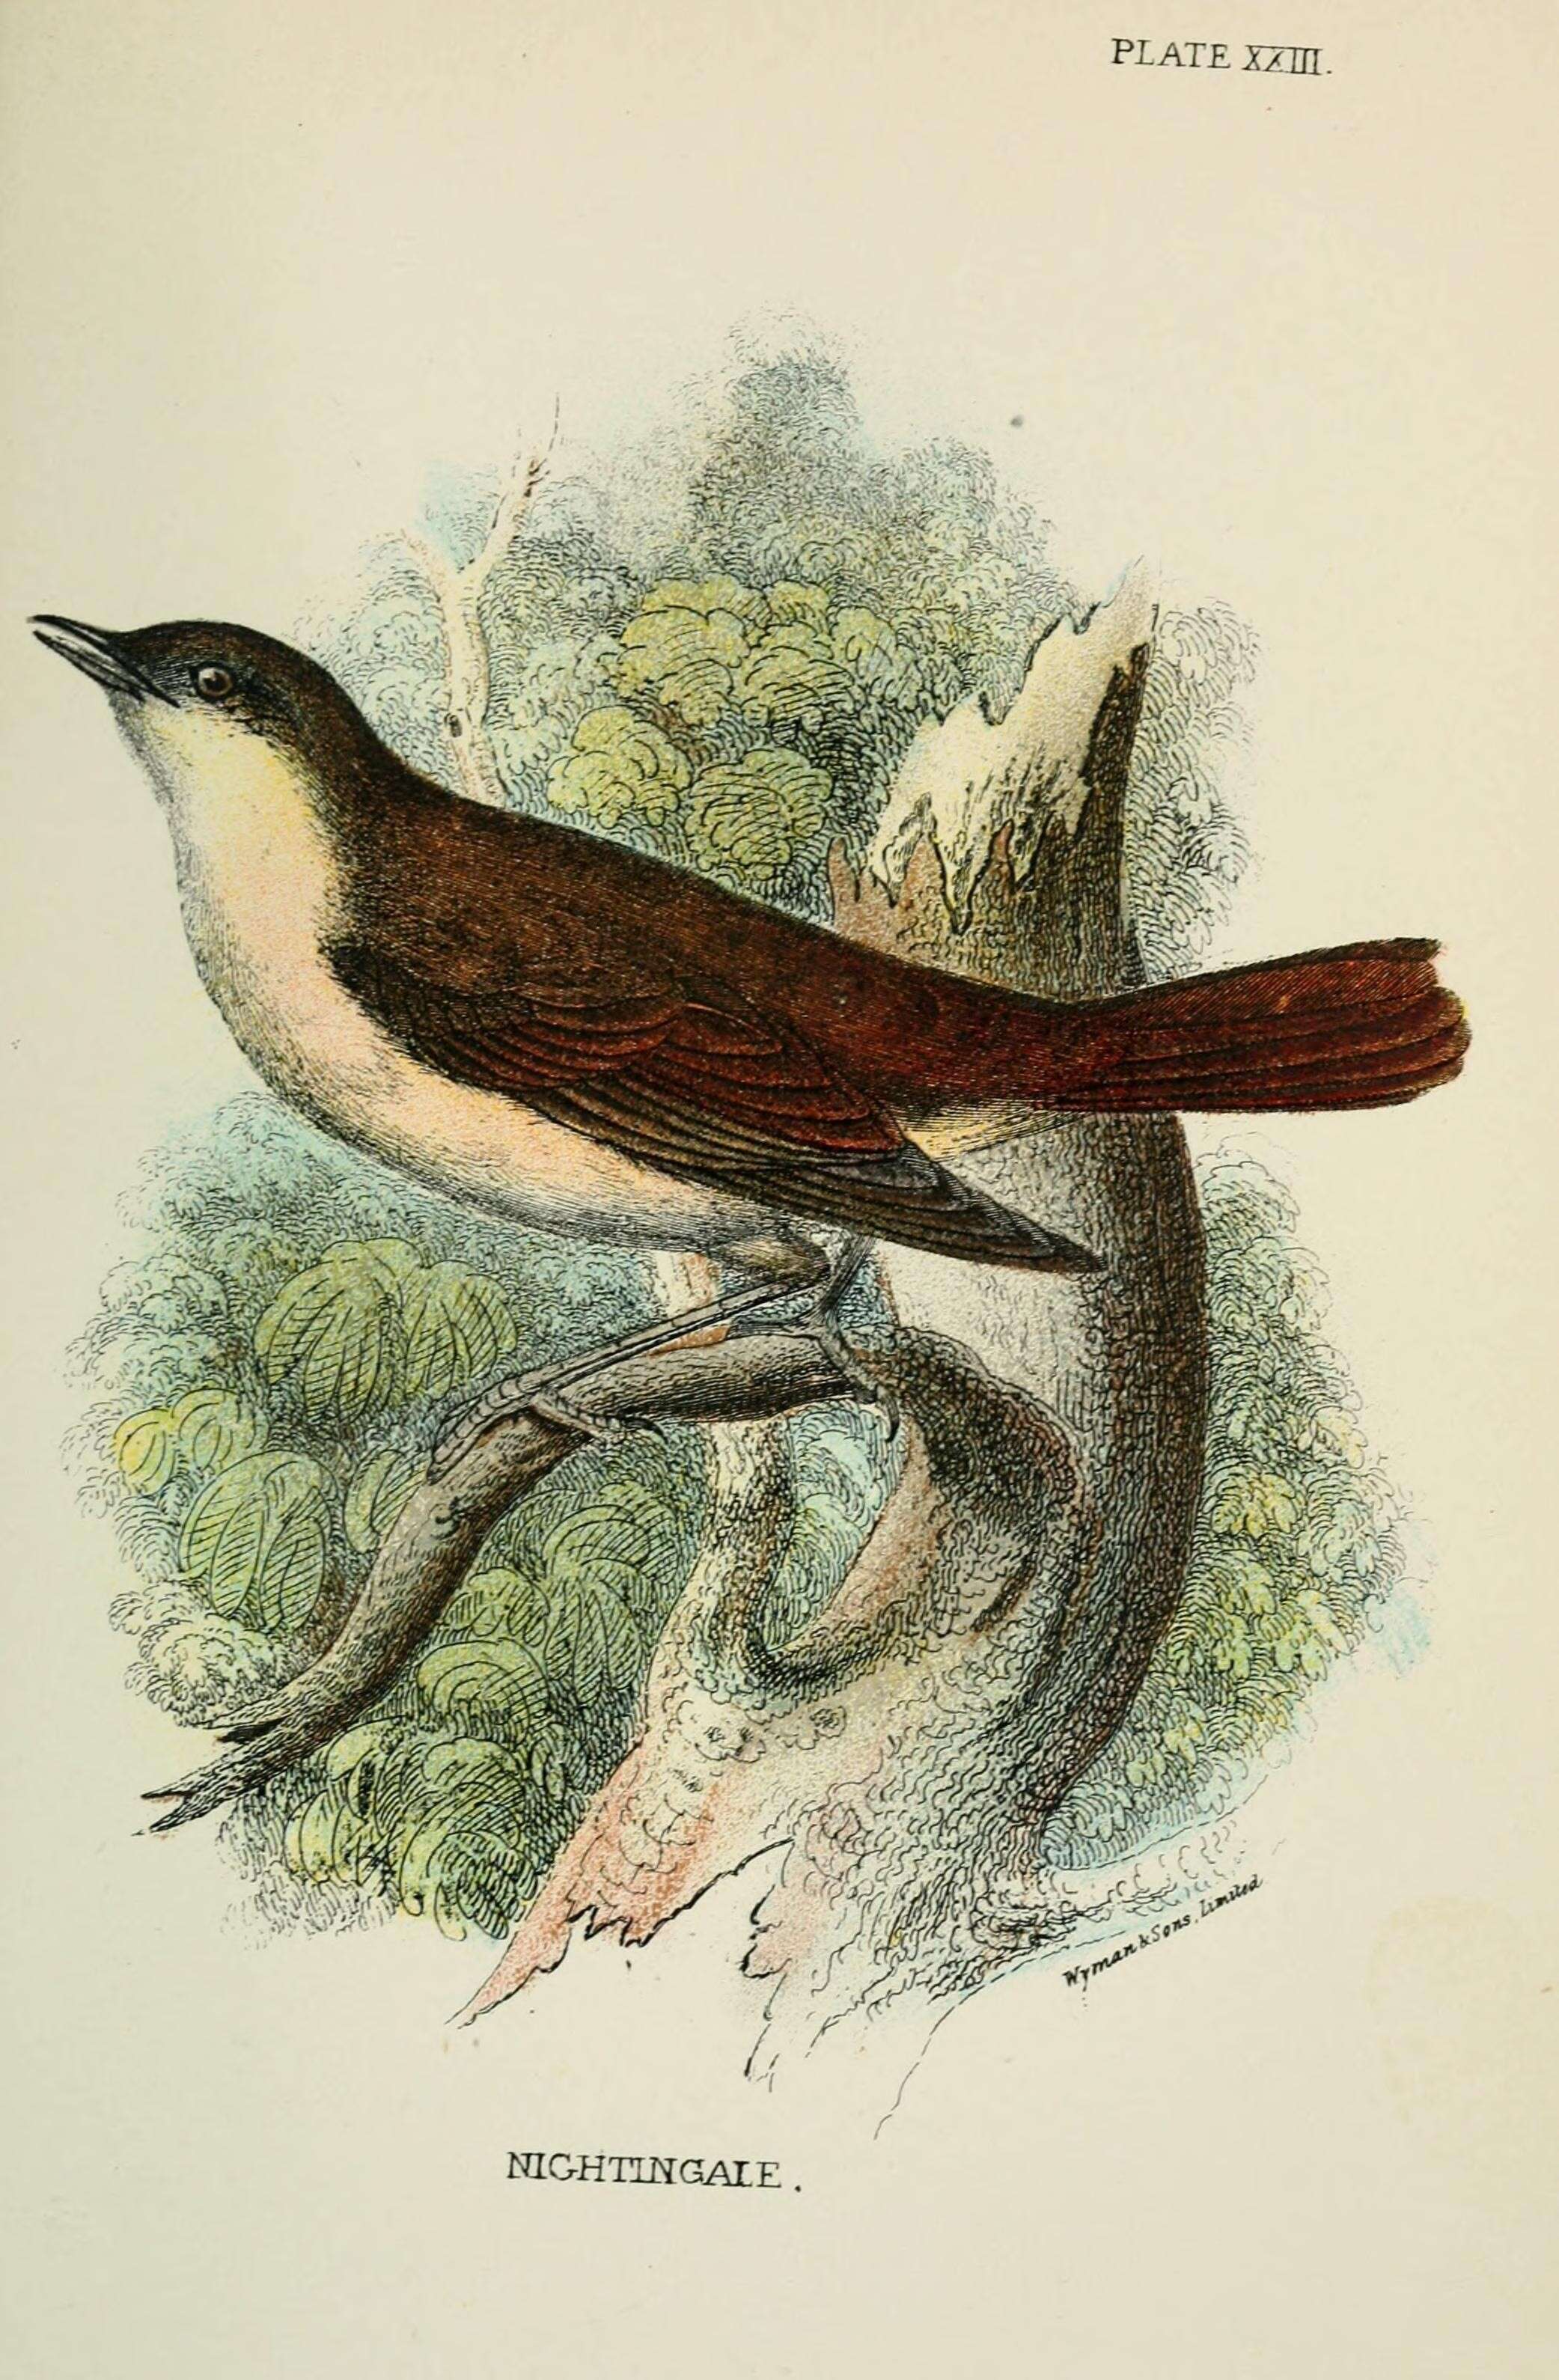 Image of nightingale, common nightingale